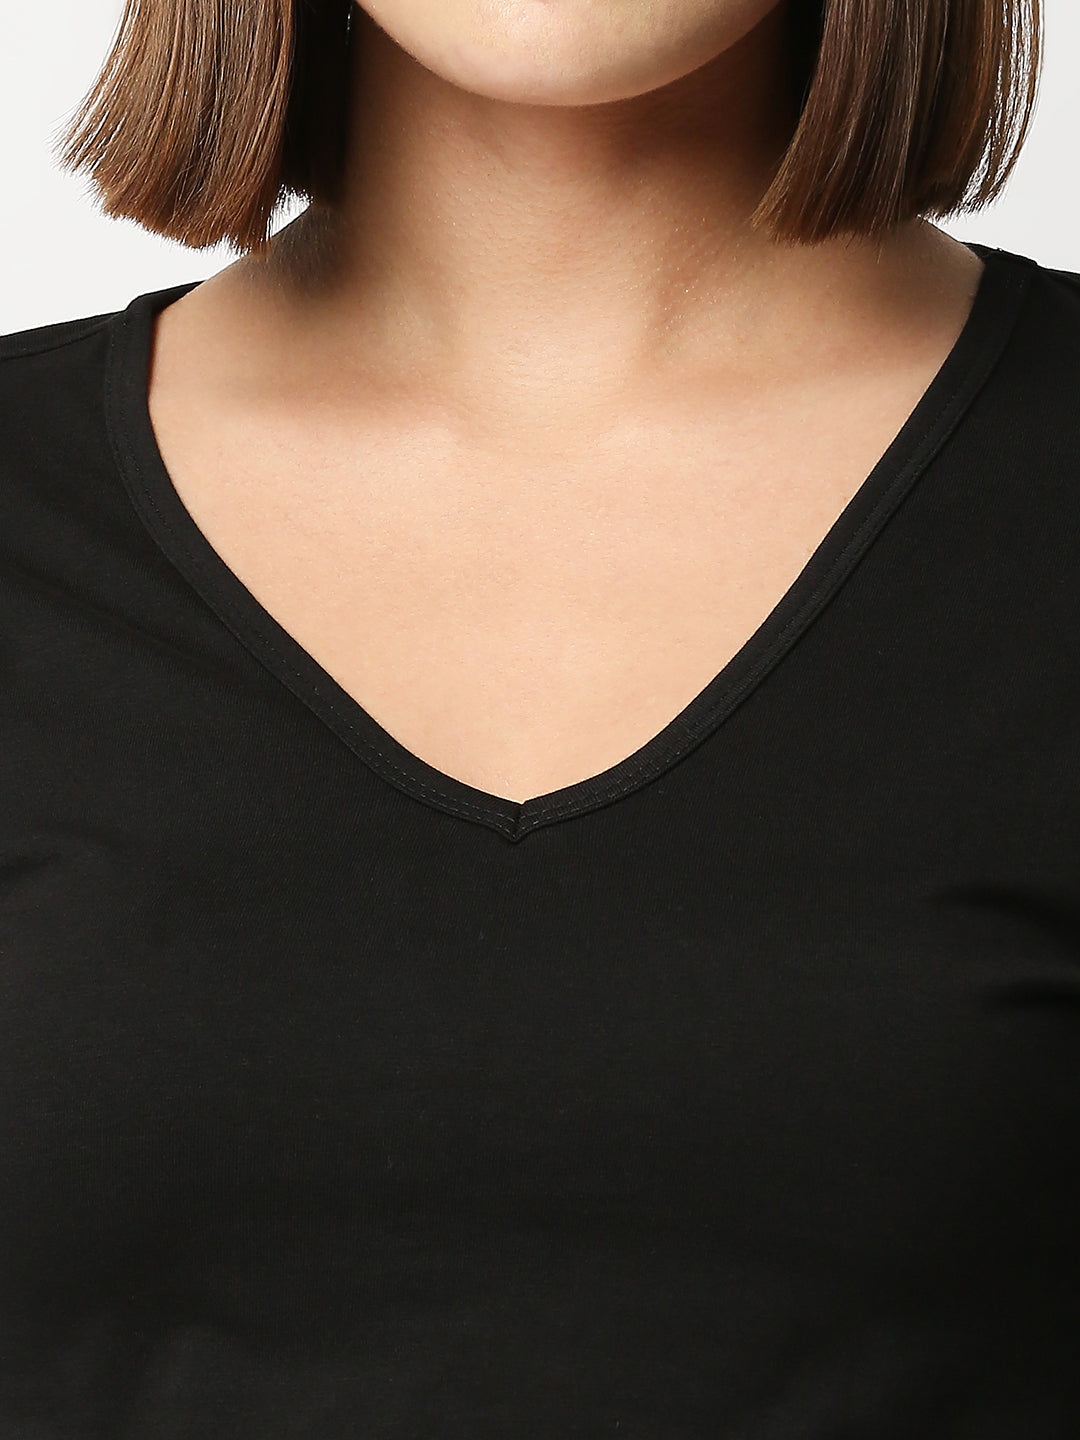 Buy BLAMBLACK Women V Neck Crop Top Black Color Solid Full sleeve